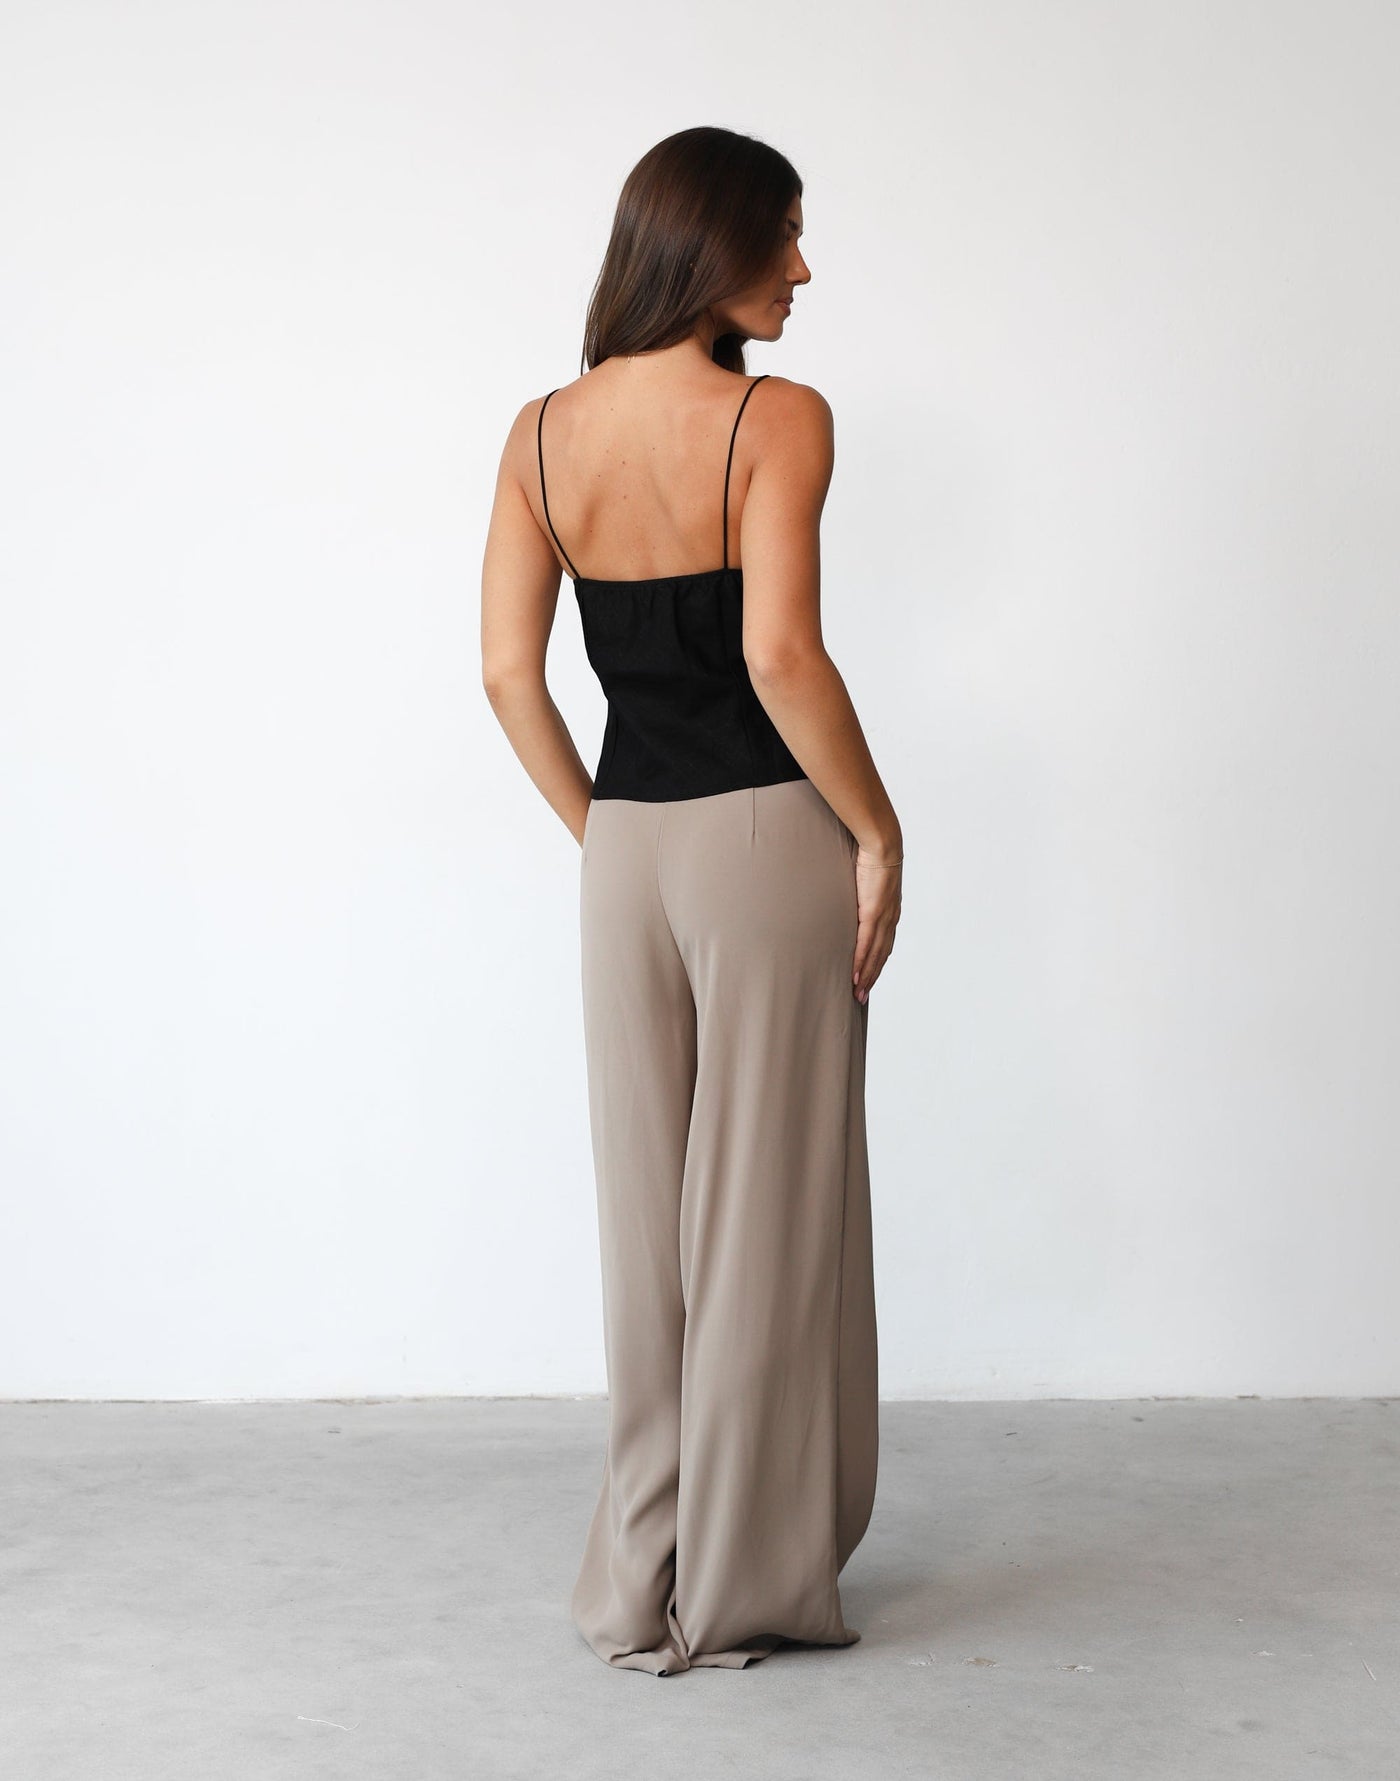 Tahani Cami Top (Black) - V-neckline Thin Elasticated Shoulder Straps - Women's Top - Charcoal Clothing